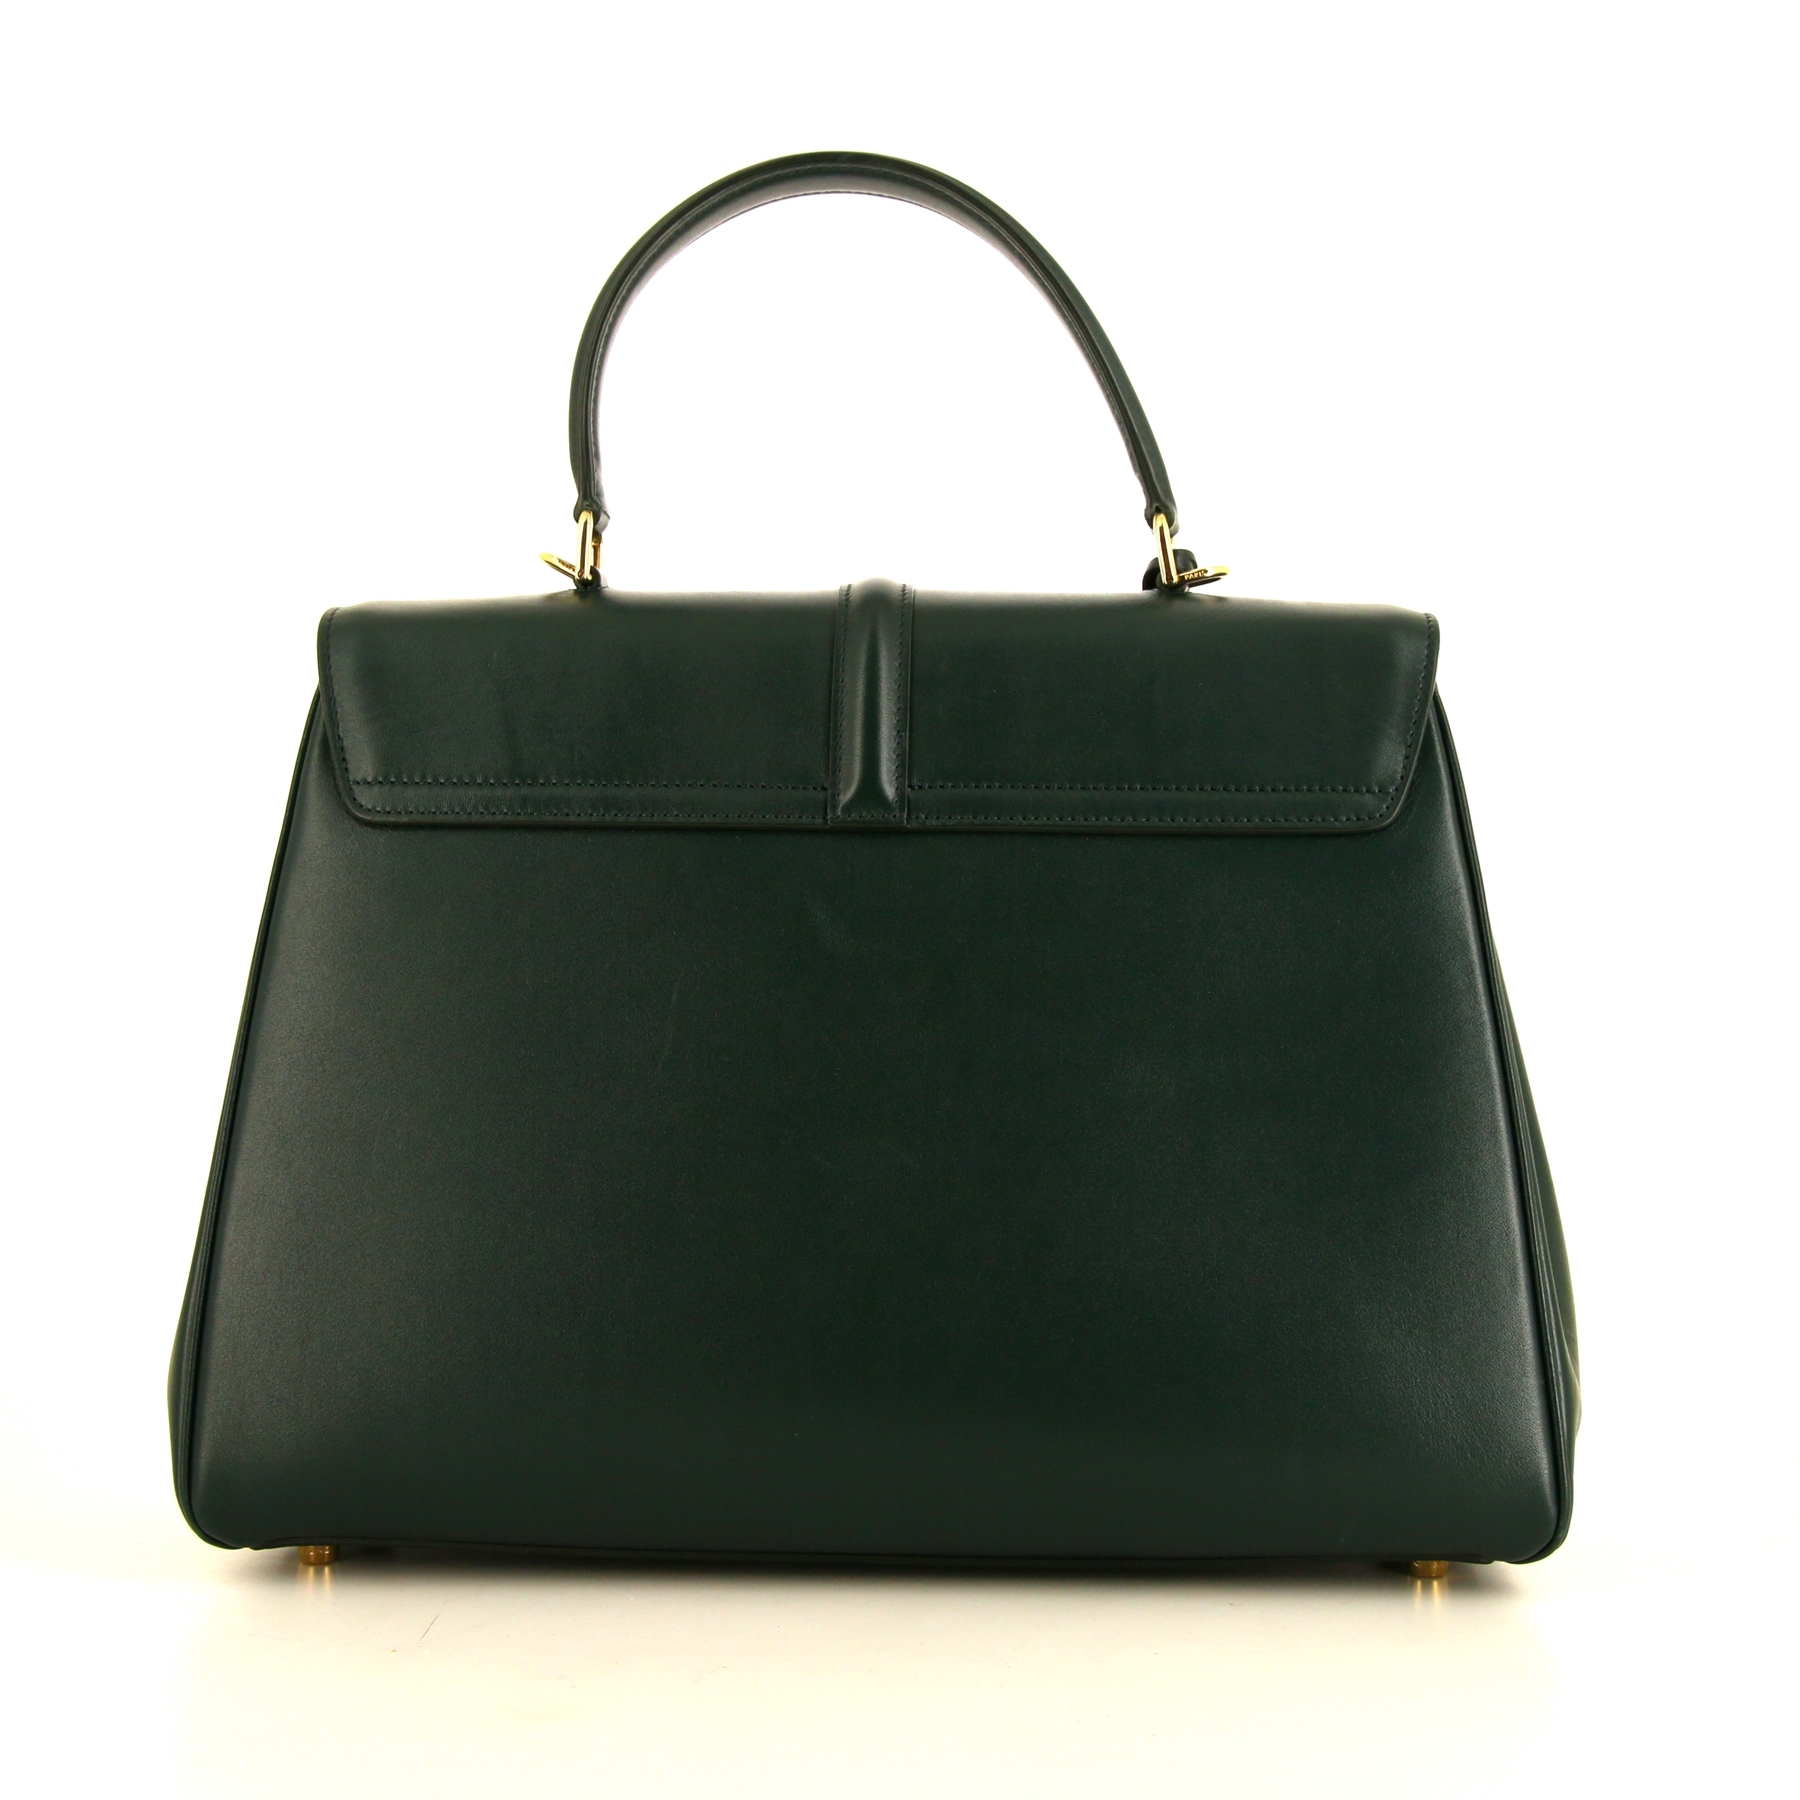 16 Handbag In Green Leather